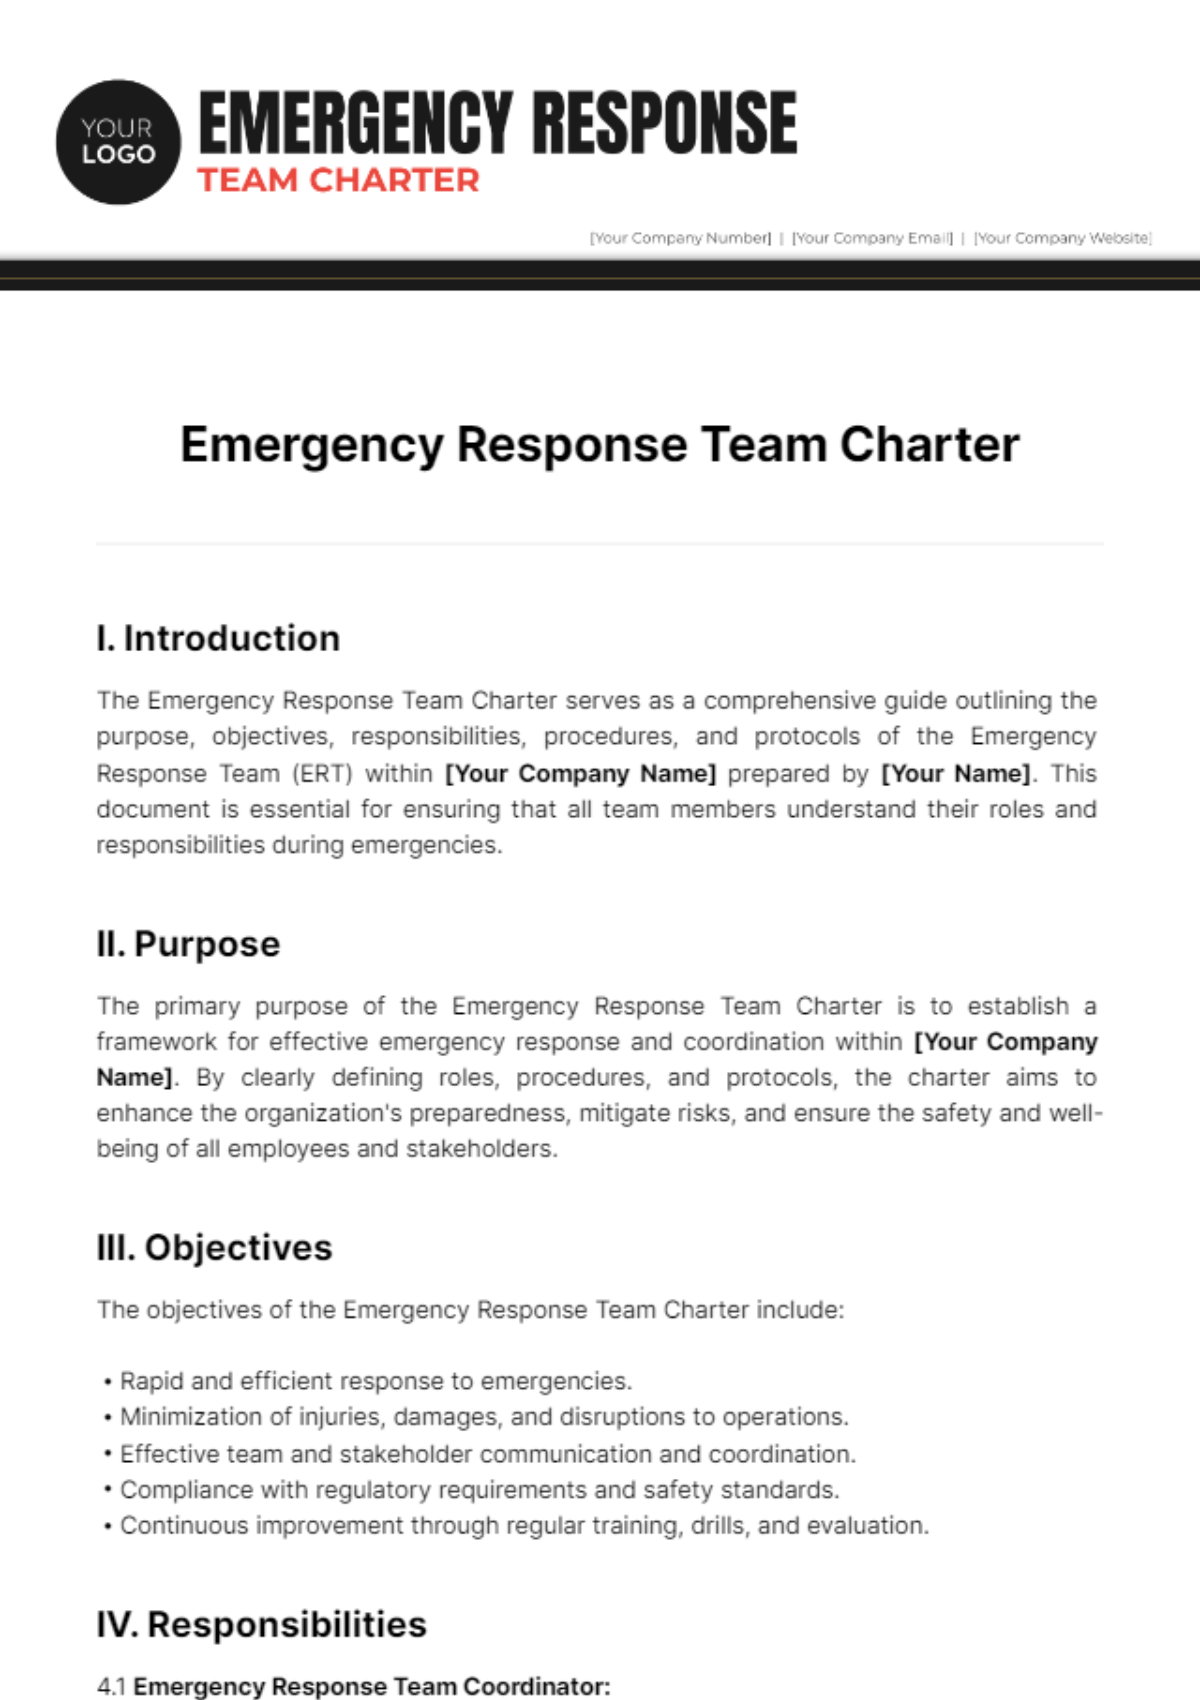 Emergency Response Team Charter Template